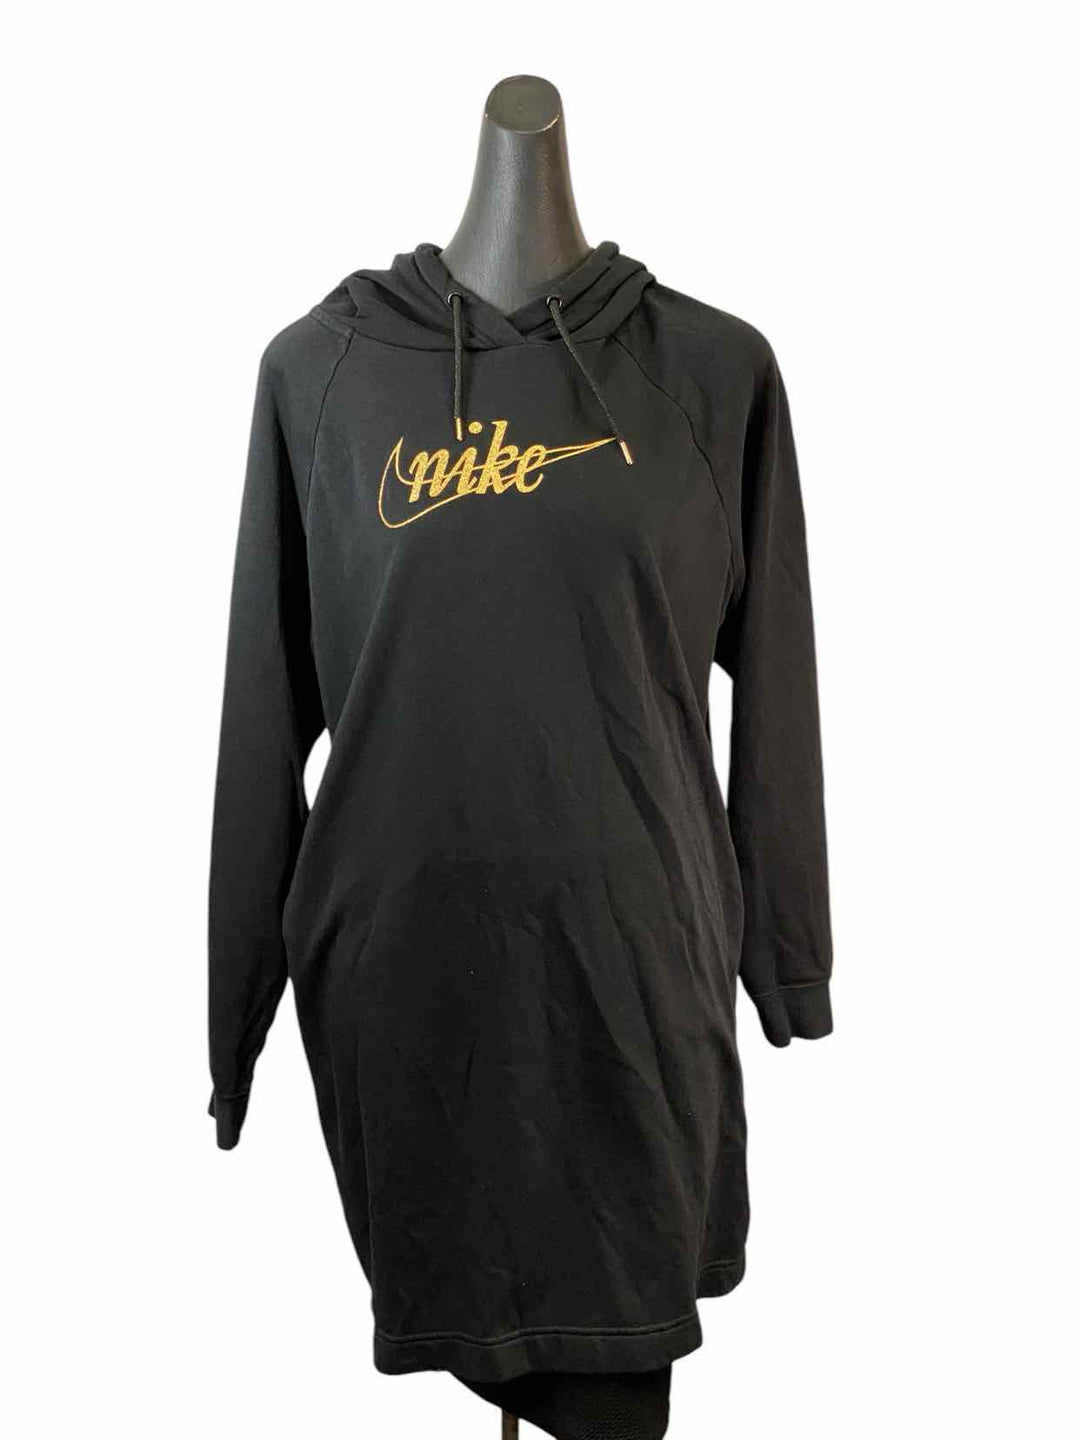 Nike Size M Black Gold Dress